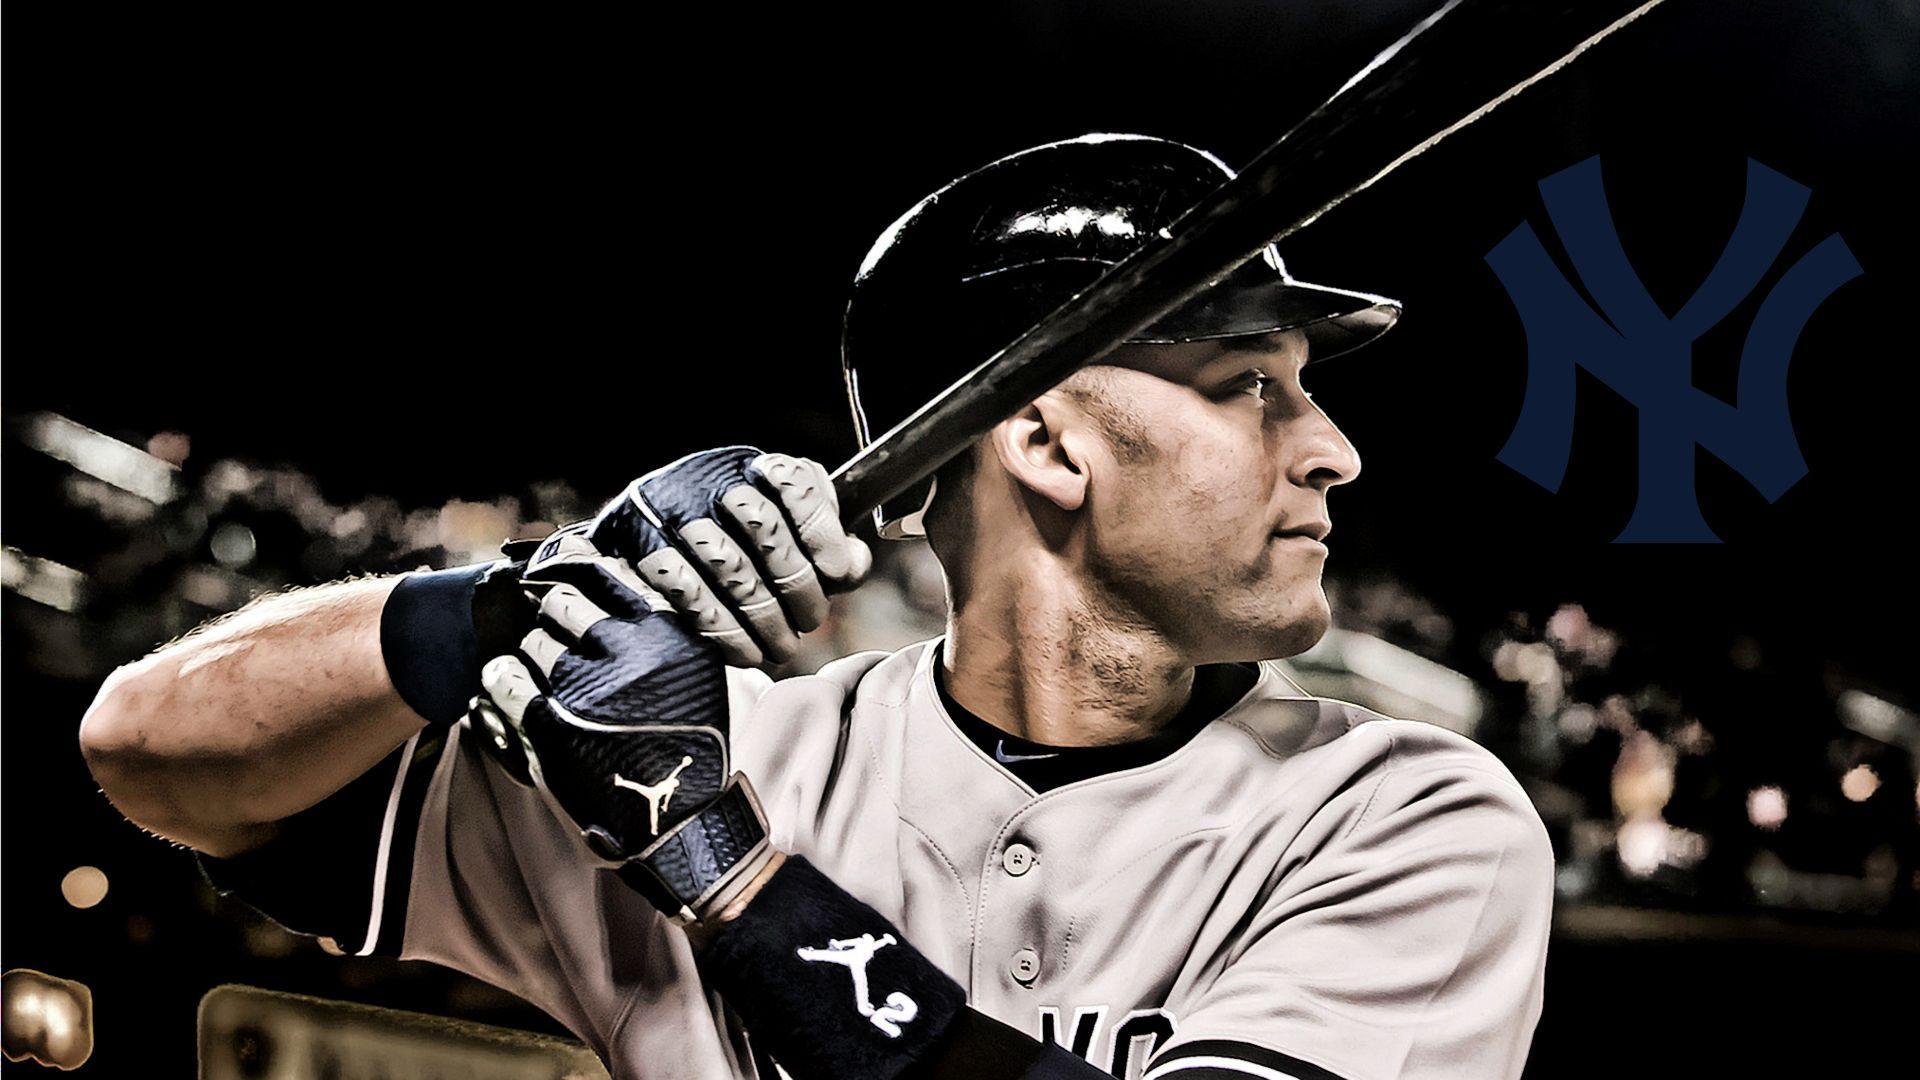 MLB New York Yankees Baseball Player wallpaper HD 2016 in Baseball